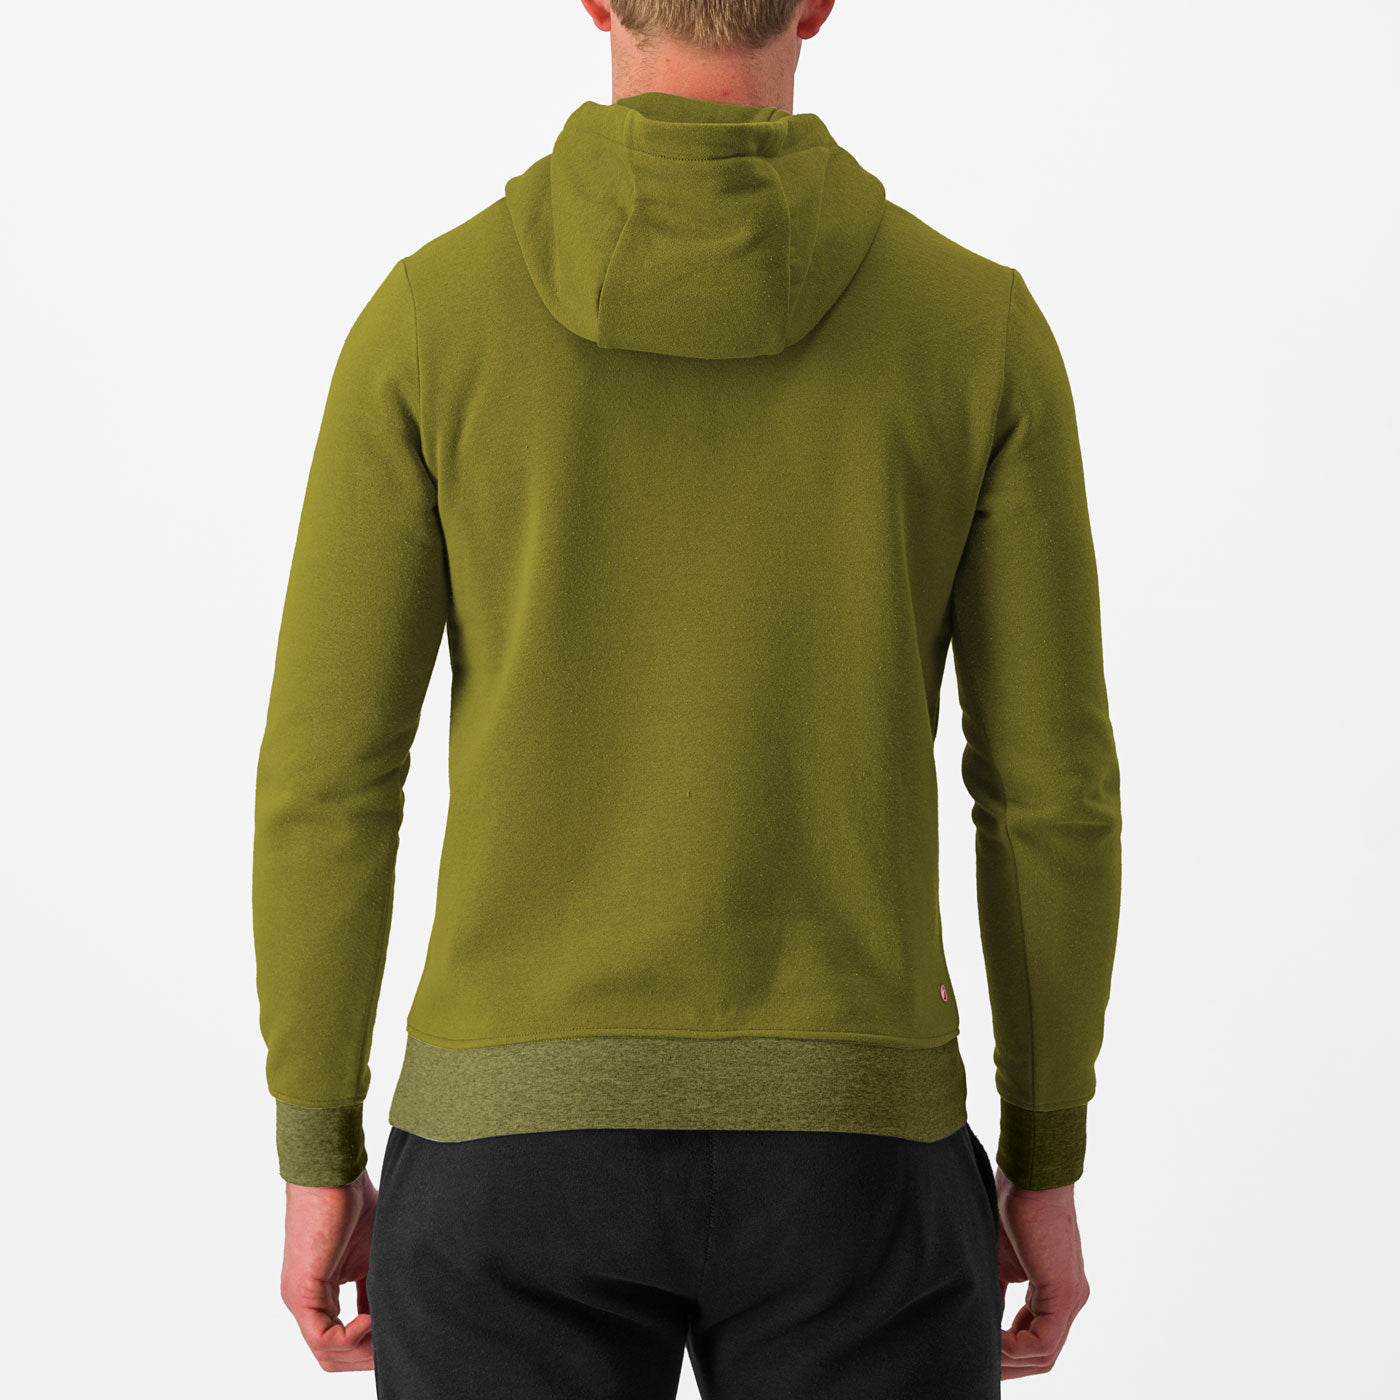 Castelli Logo Hoodie sweatshirt - Green